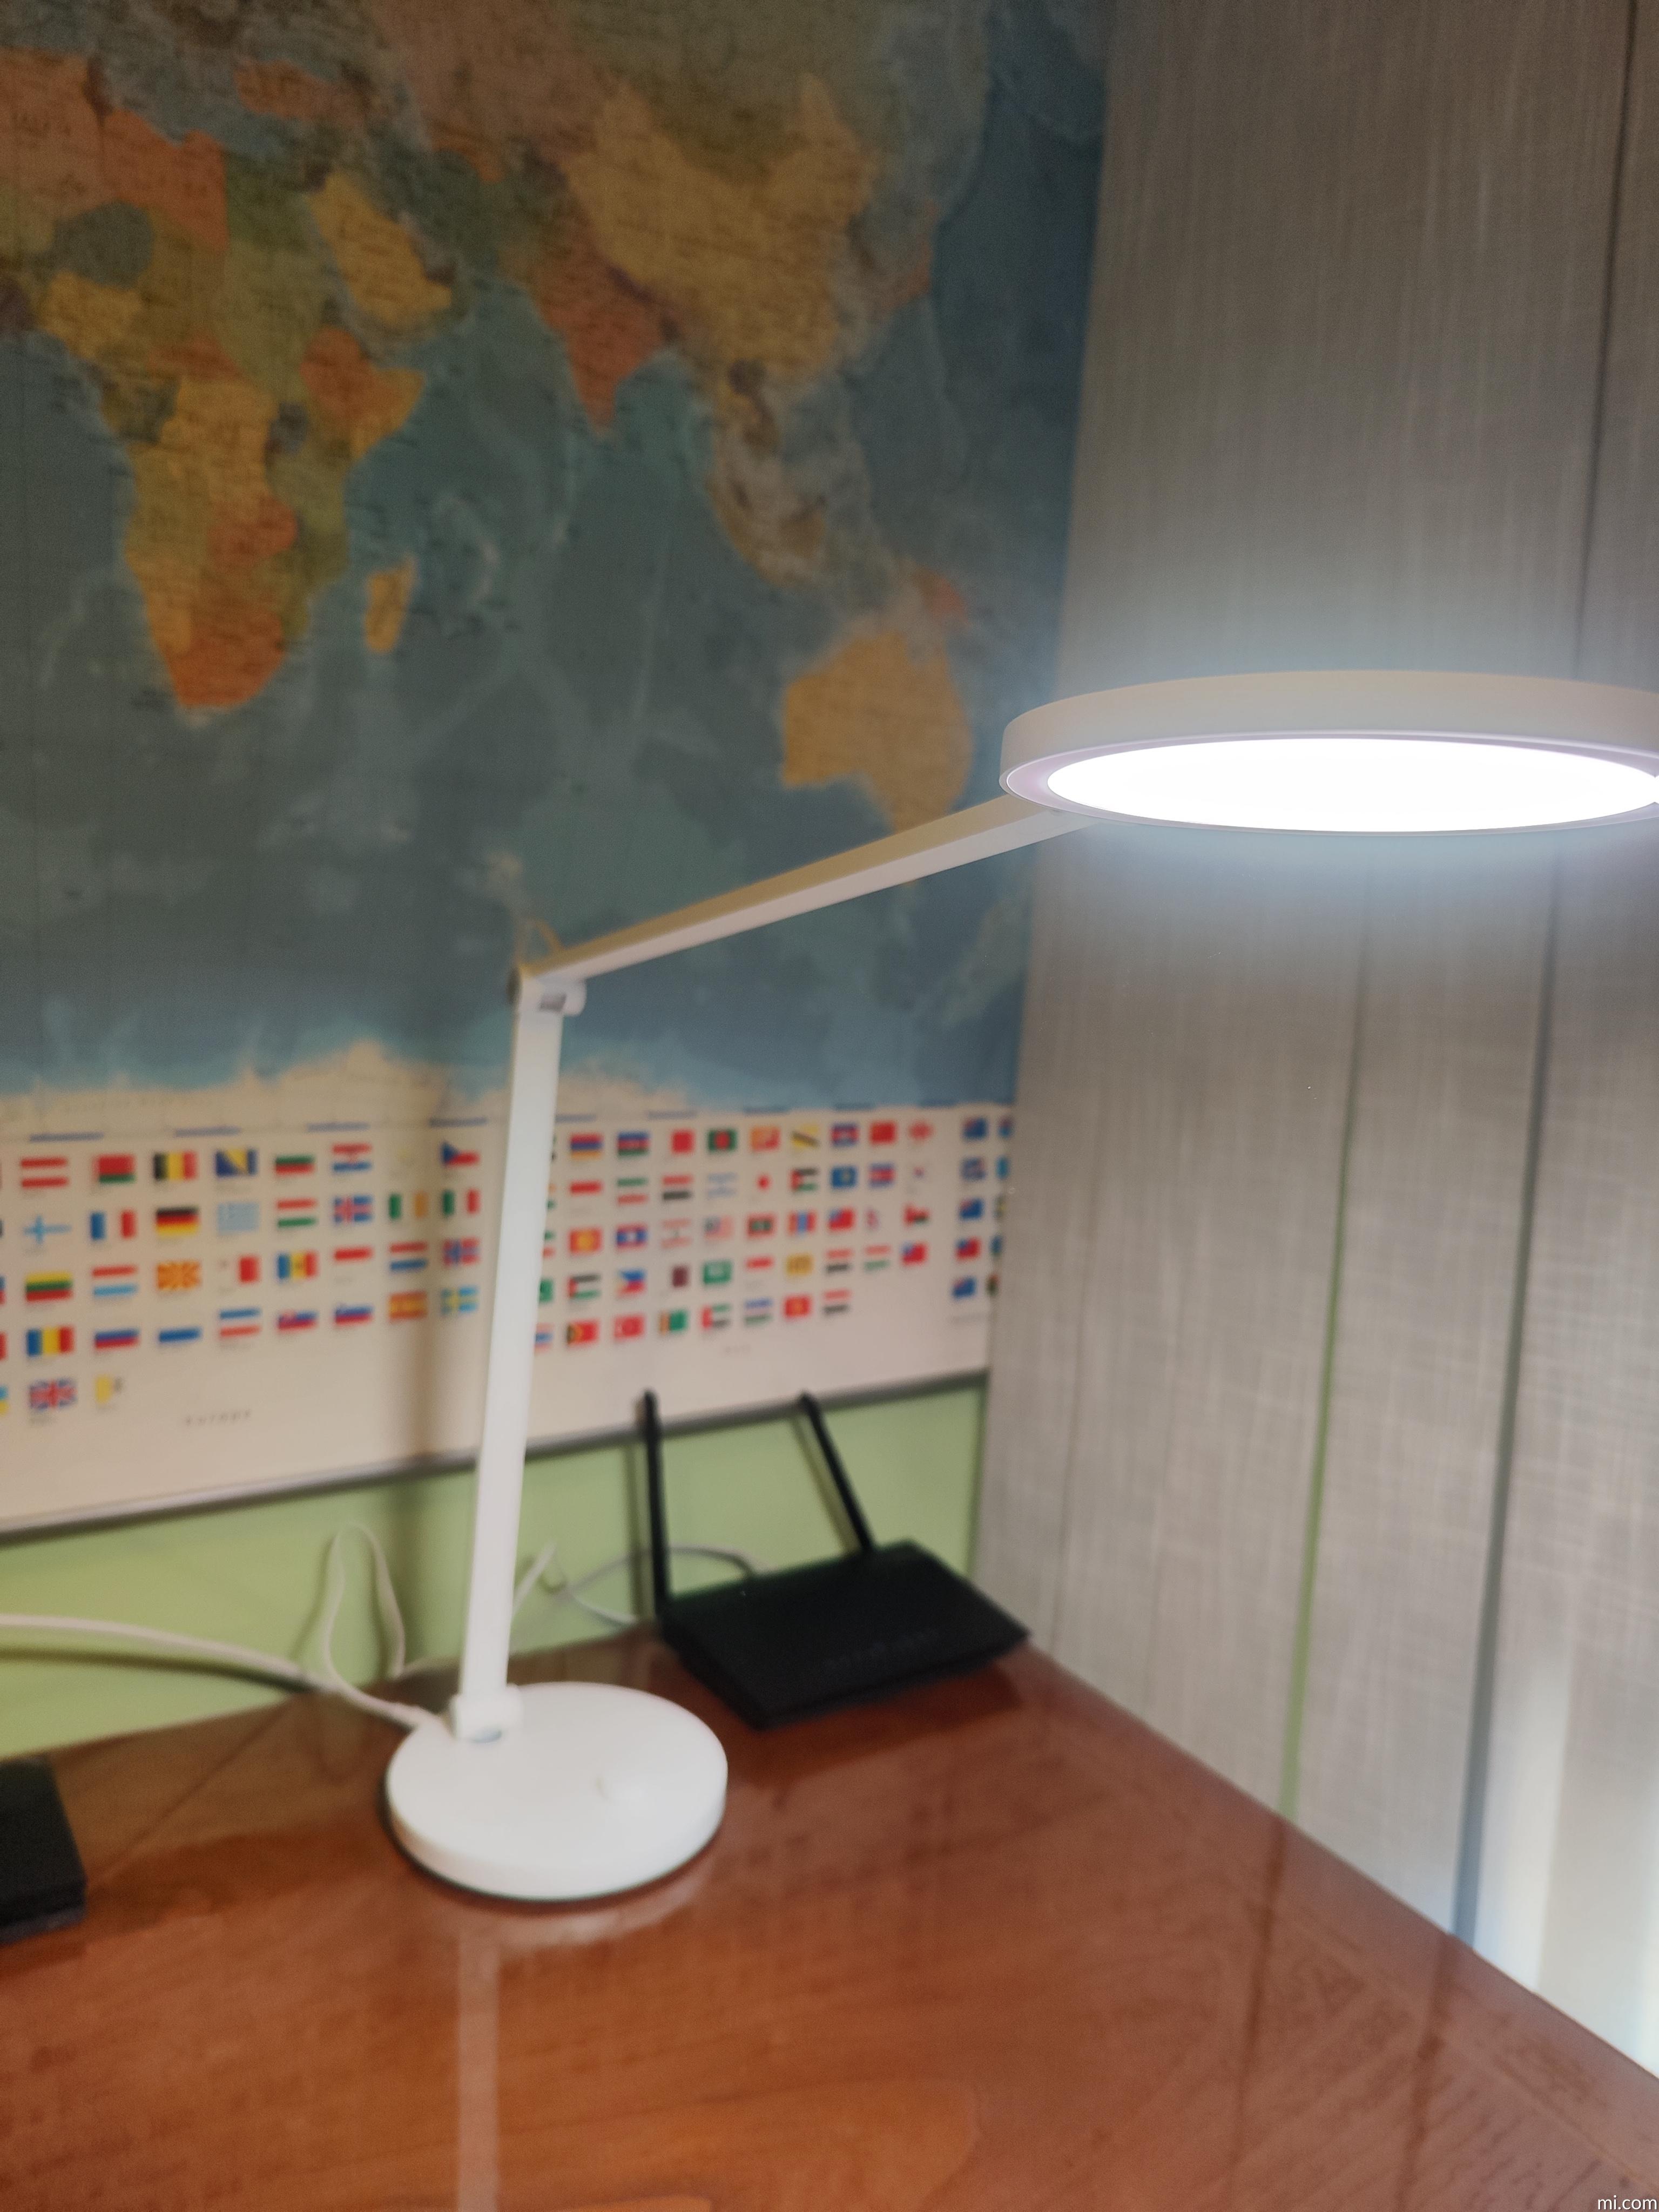 Lámpara de Escritorio Xiaomi Mi Smart LED Desk Lamp Pro White_Xiaomi Store